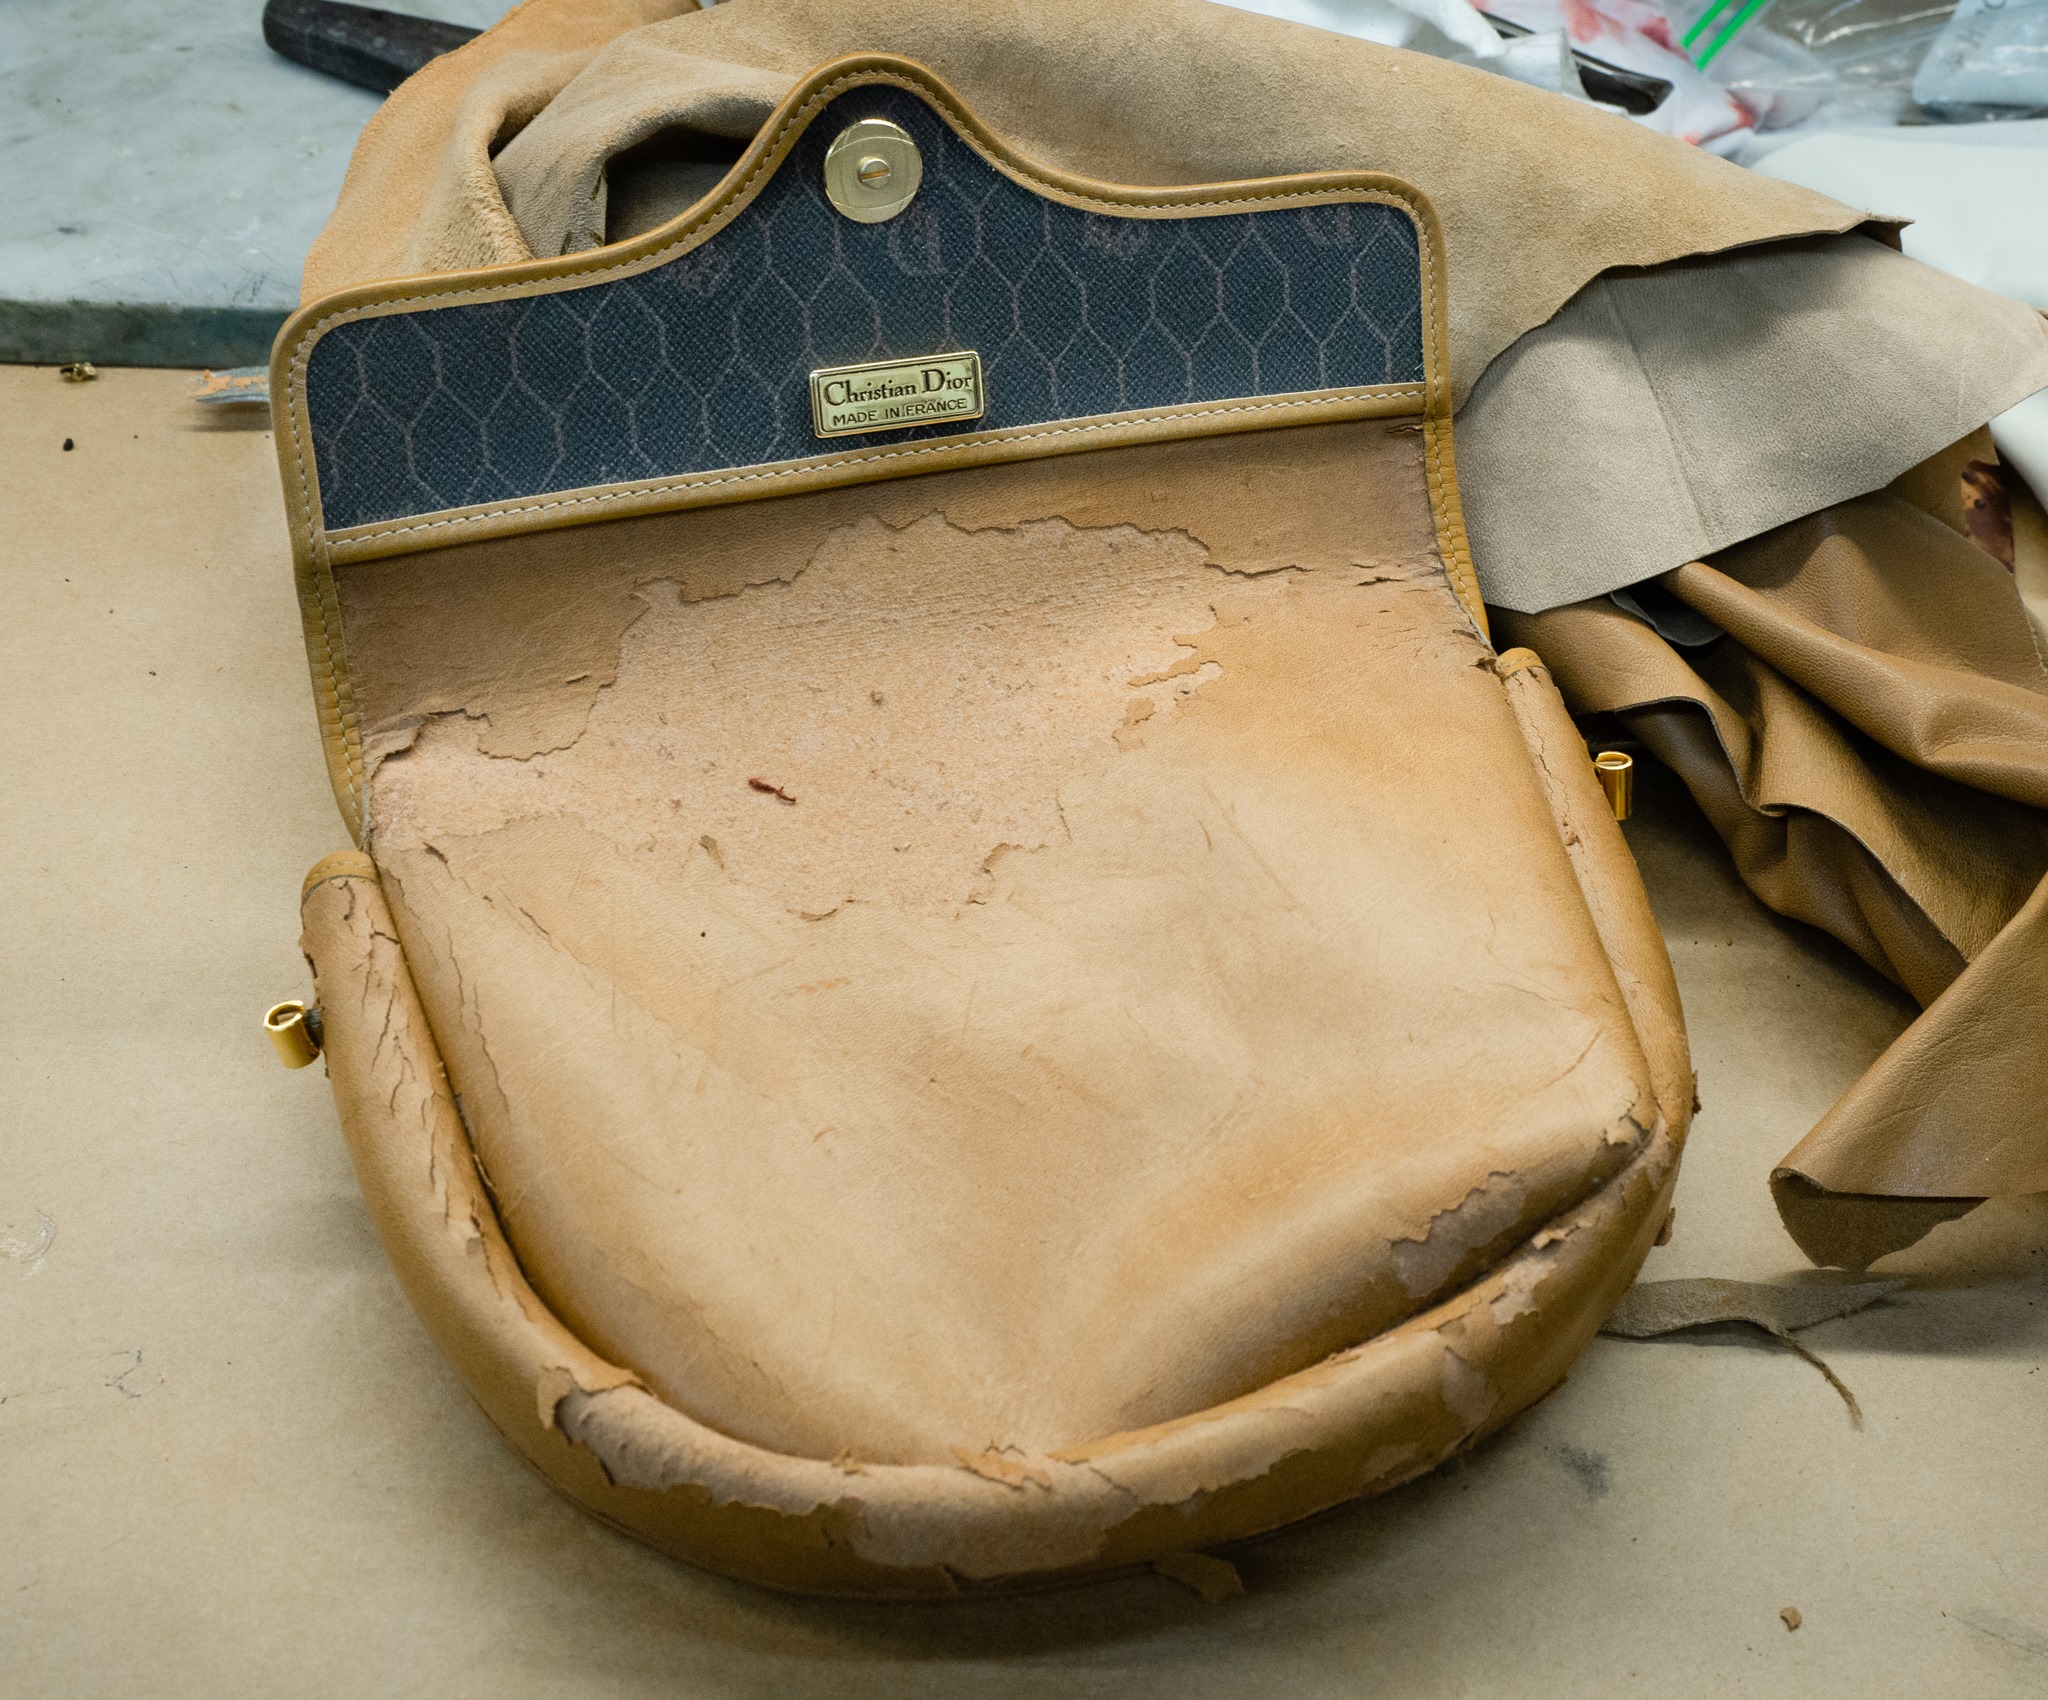 Evans - Handbag Repairs Australia, Cleaning & Restoration